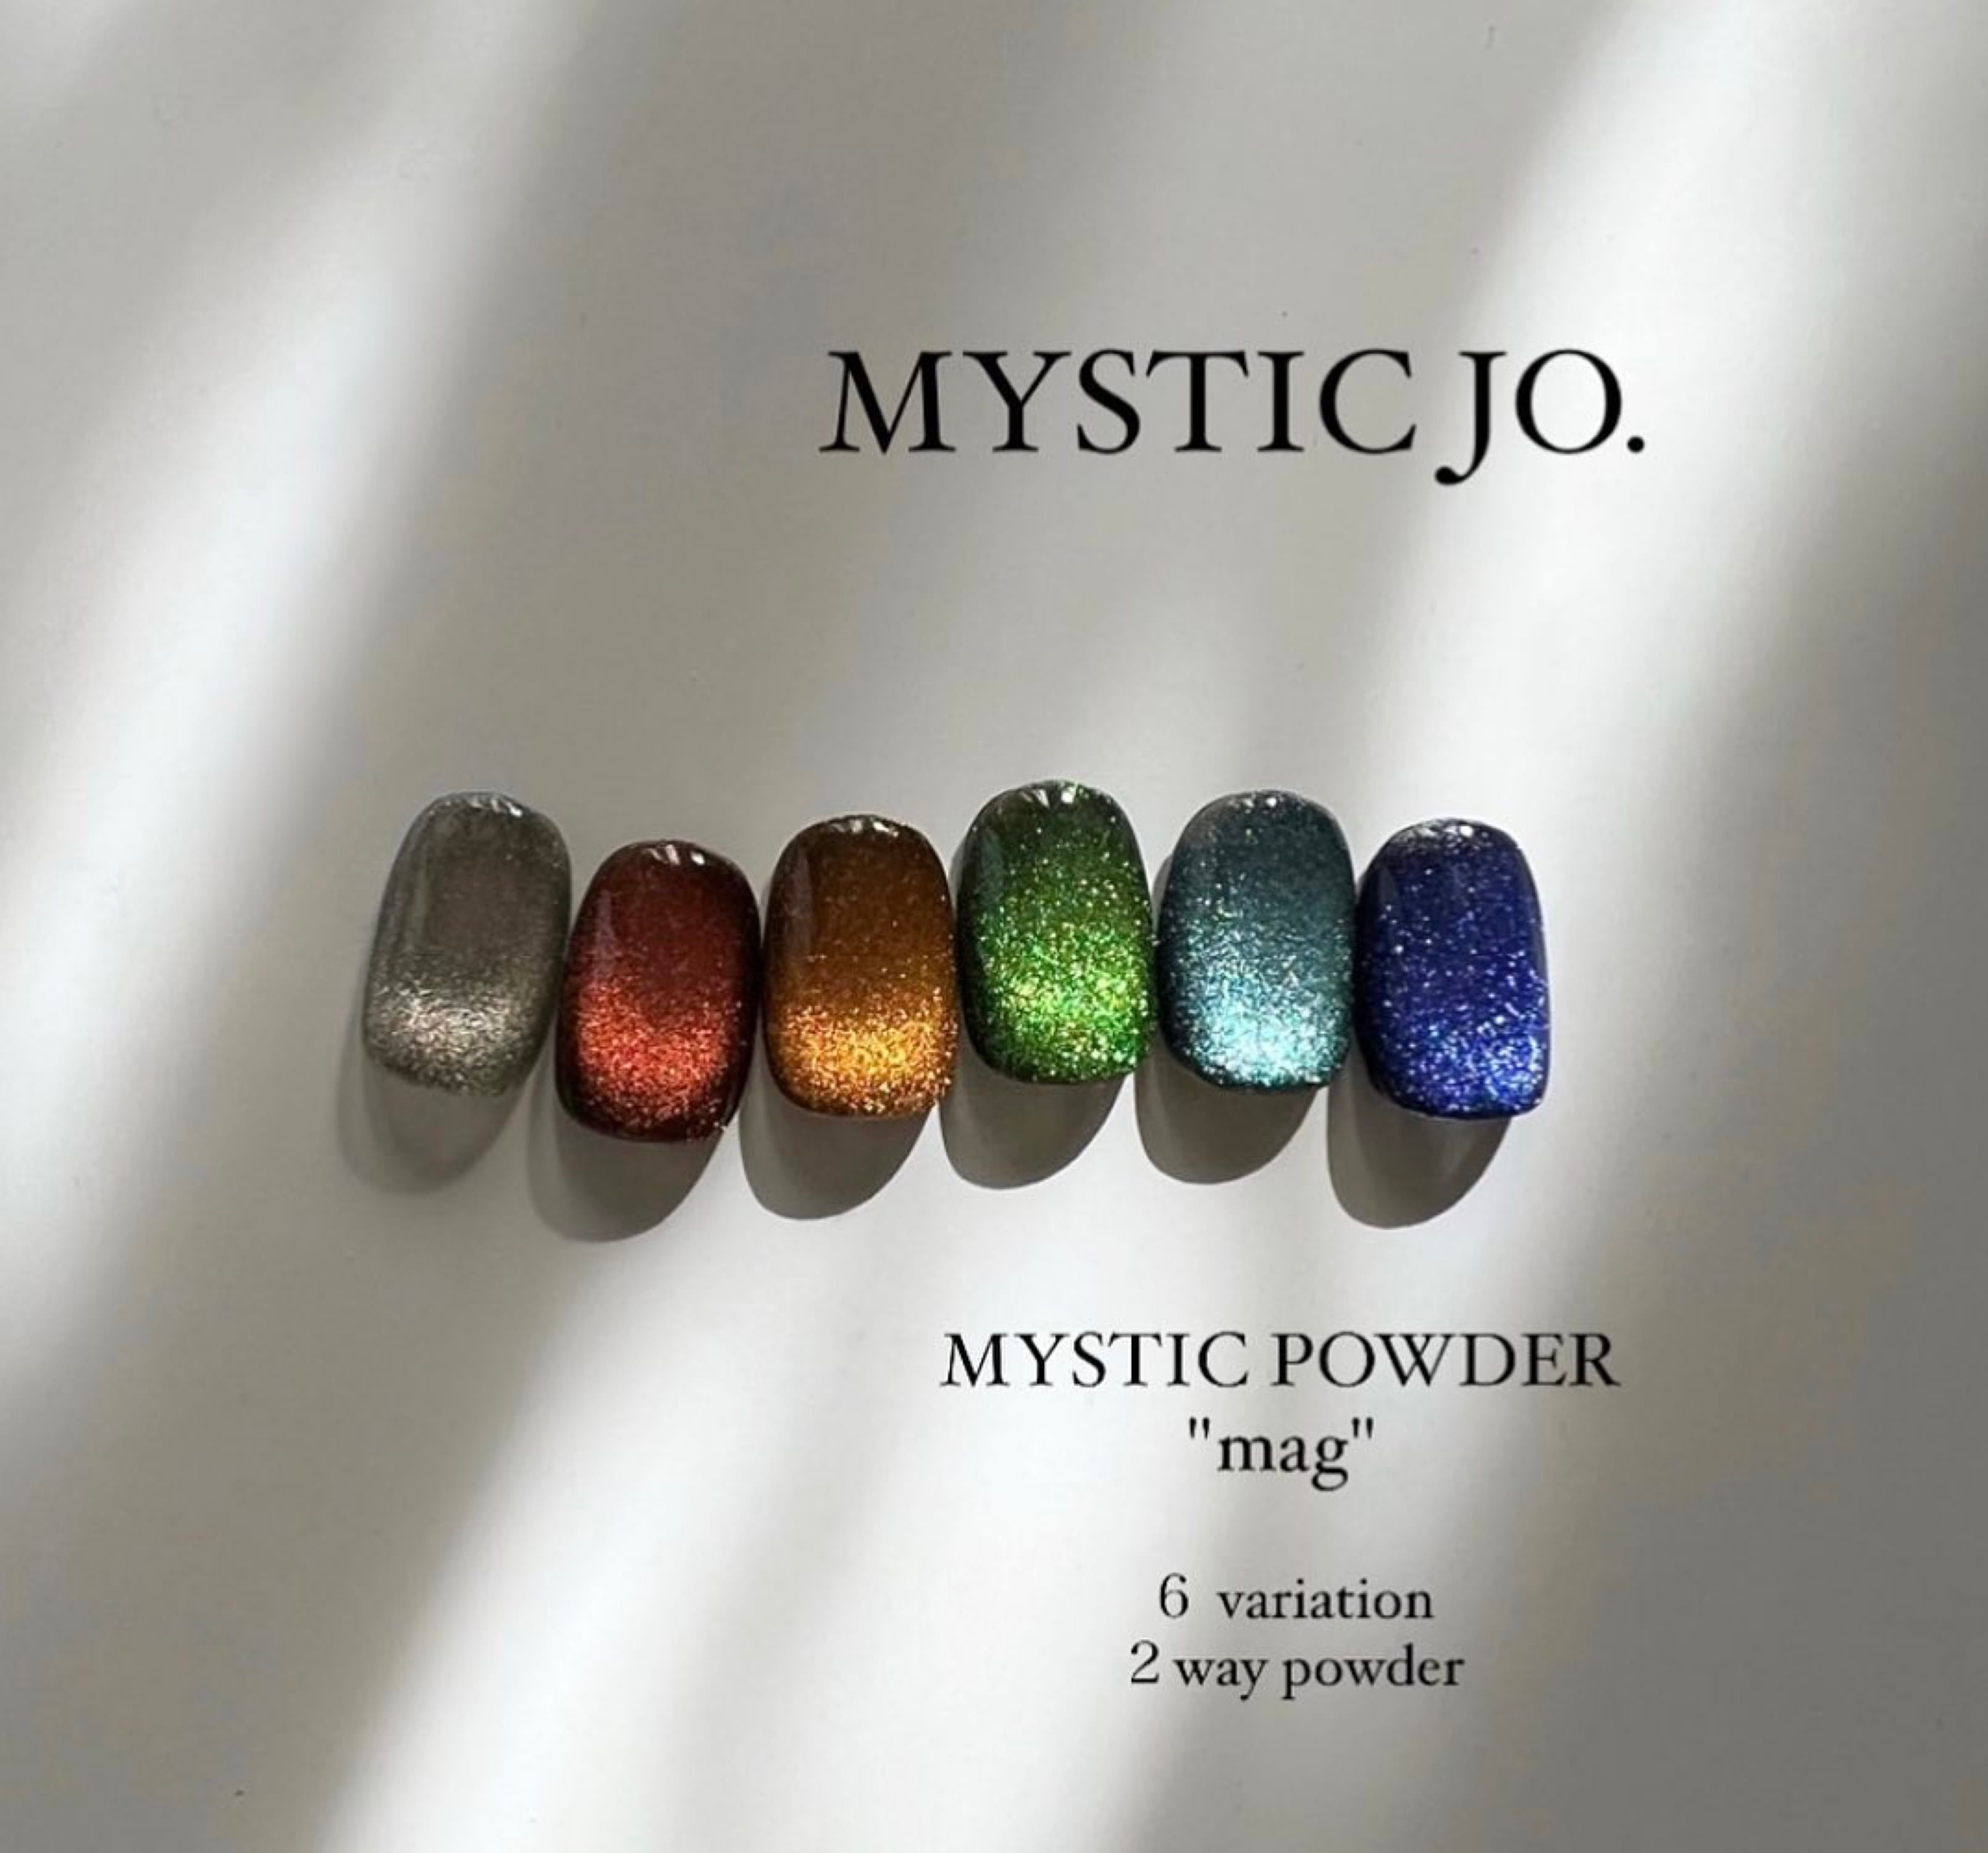 Mystic Jo. - Mystic Powder “mag”